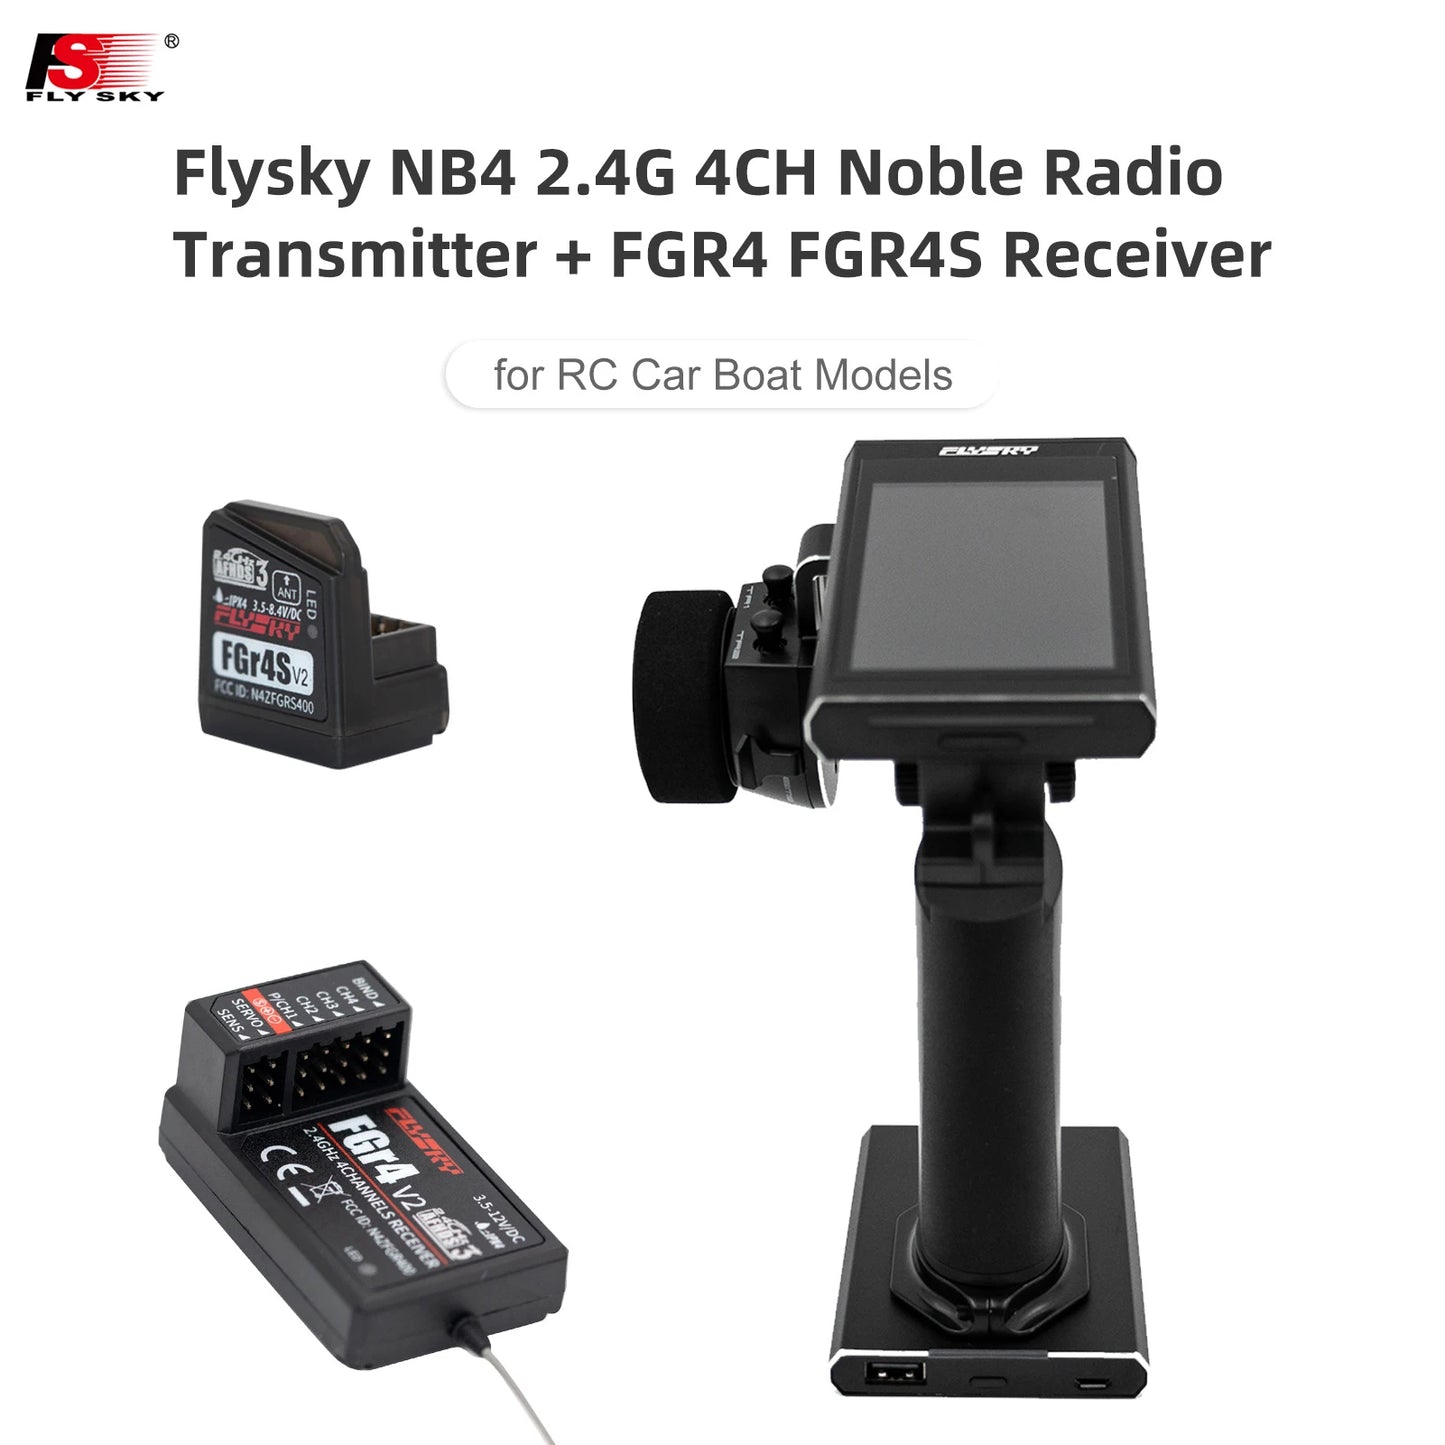 Flysky Noble NB4 2.4G 4CH Radio Transmitter Remote Controller with FGR4 FGR4S Receiver AFHDS 3 Protocol